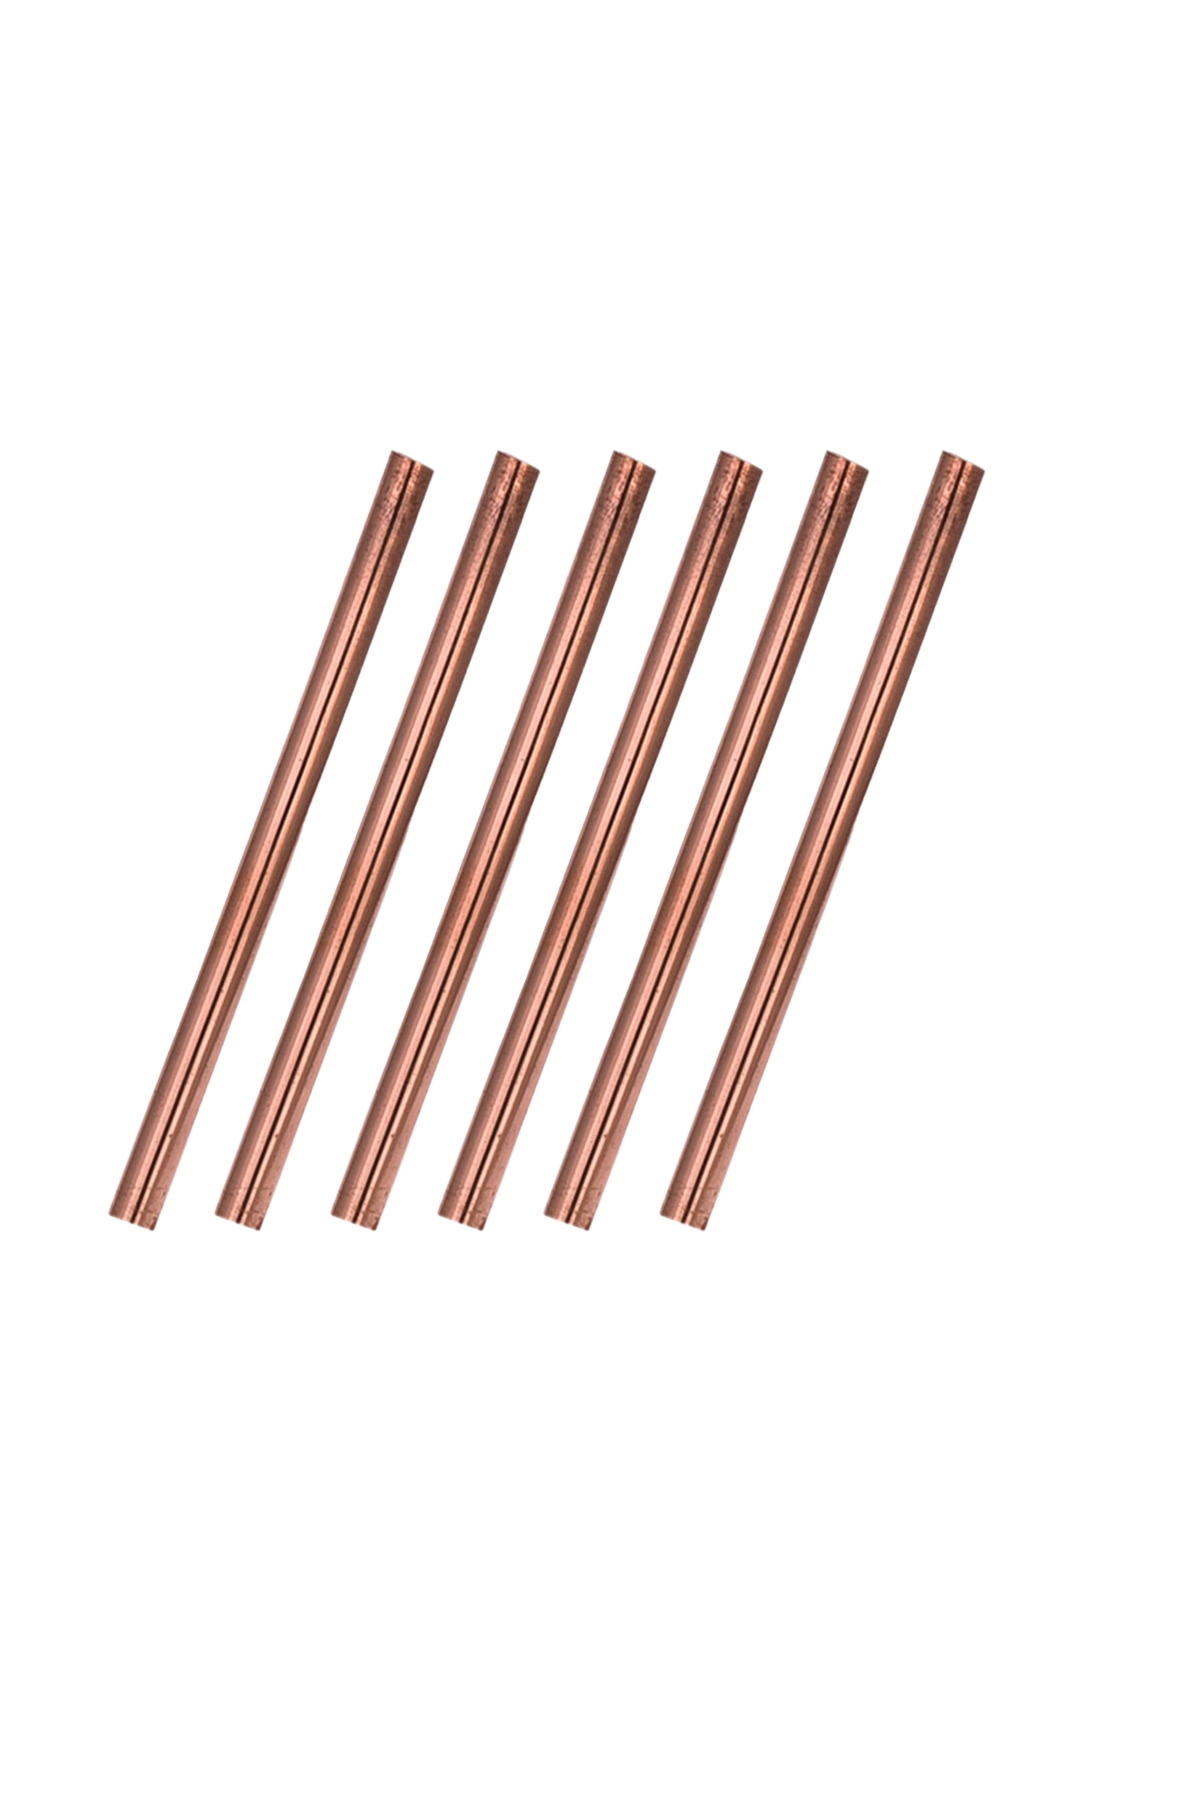 Copper Straw Straigh Set of 6